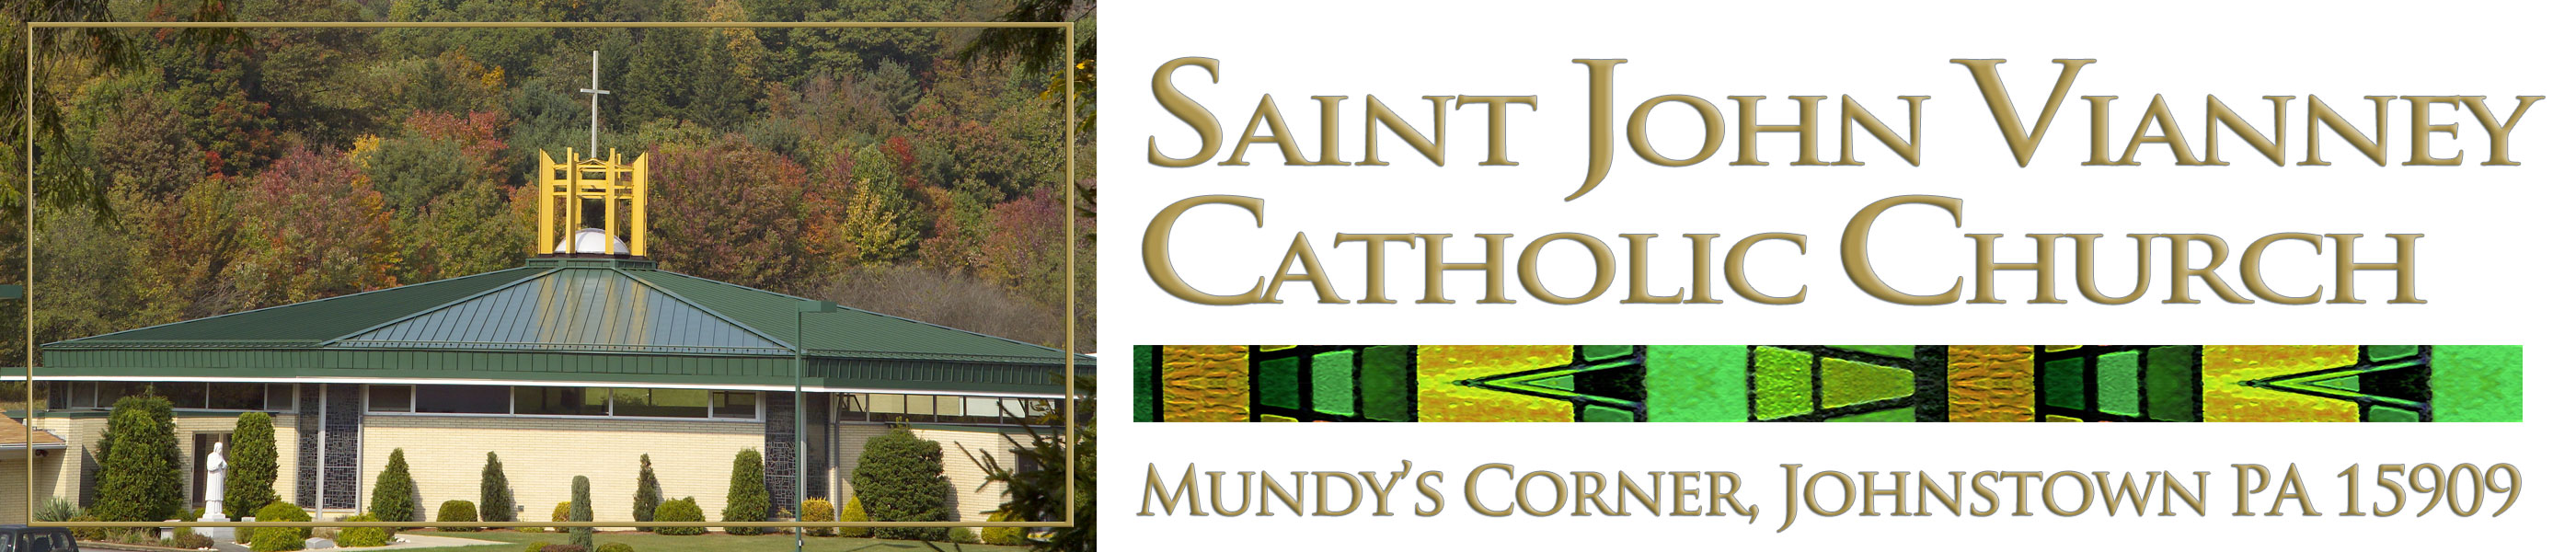 About - Saint John Vianney Catholic Church